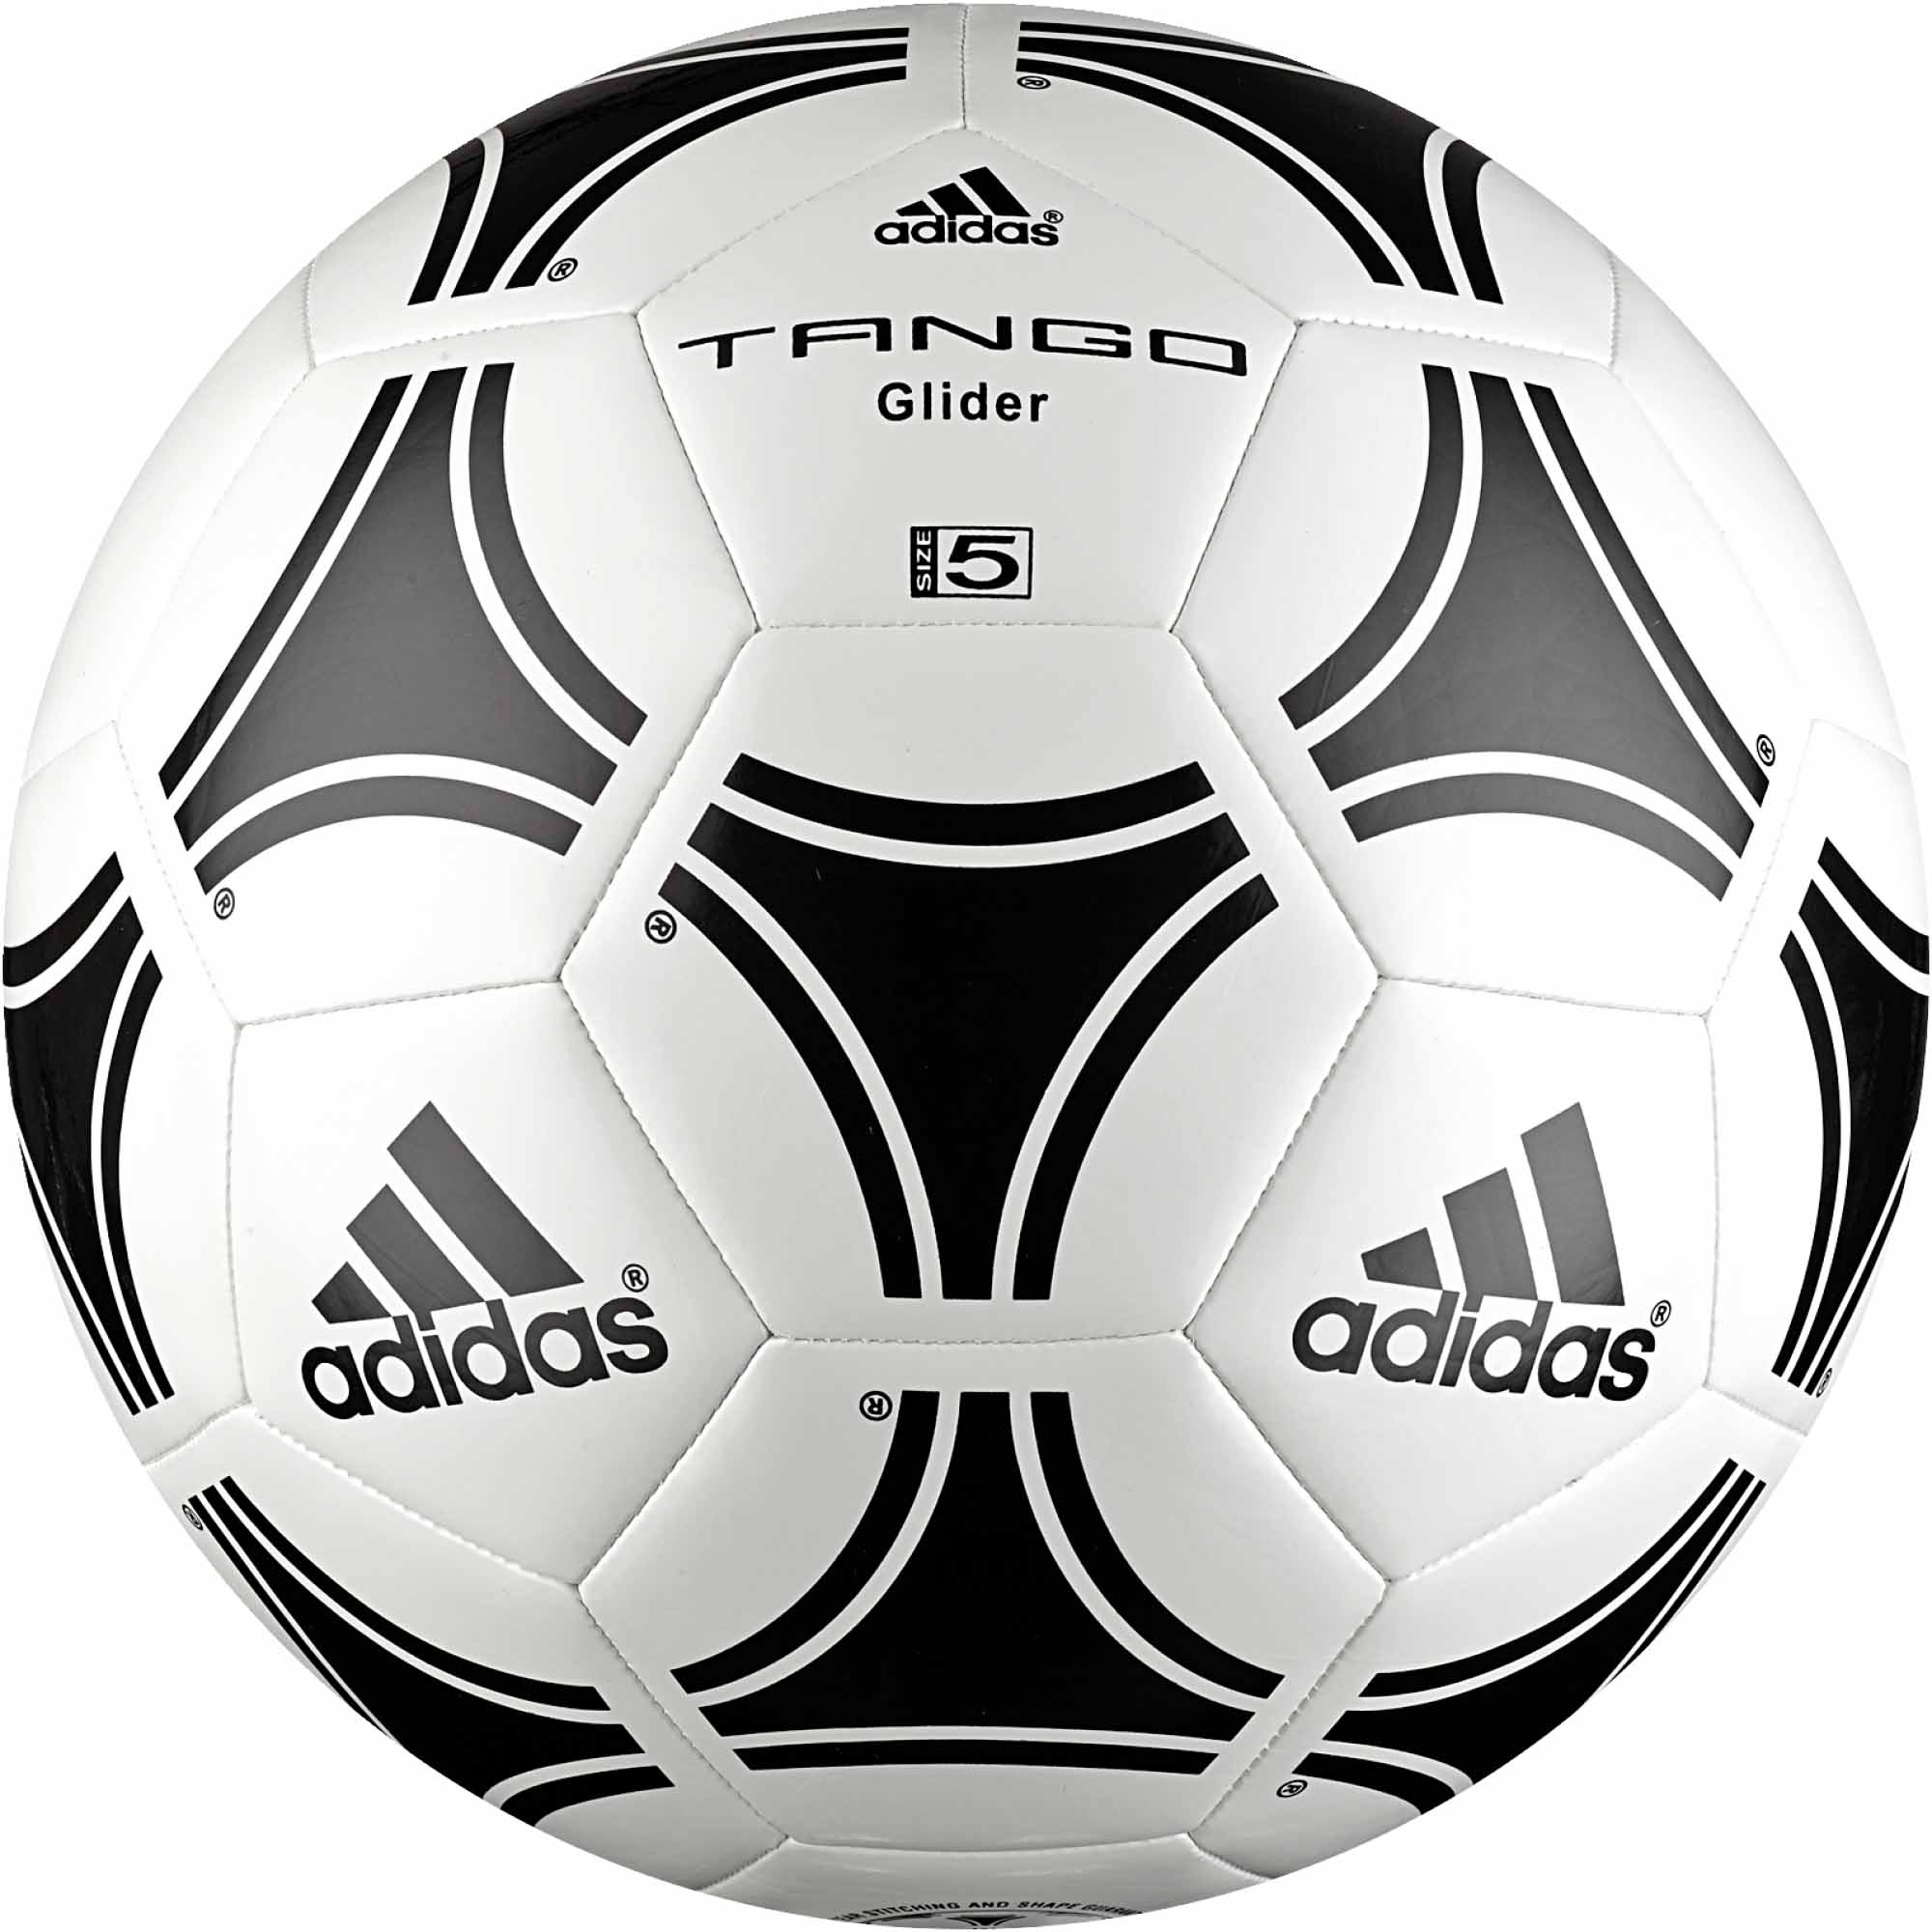 glider soccer ball